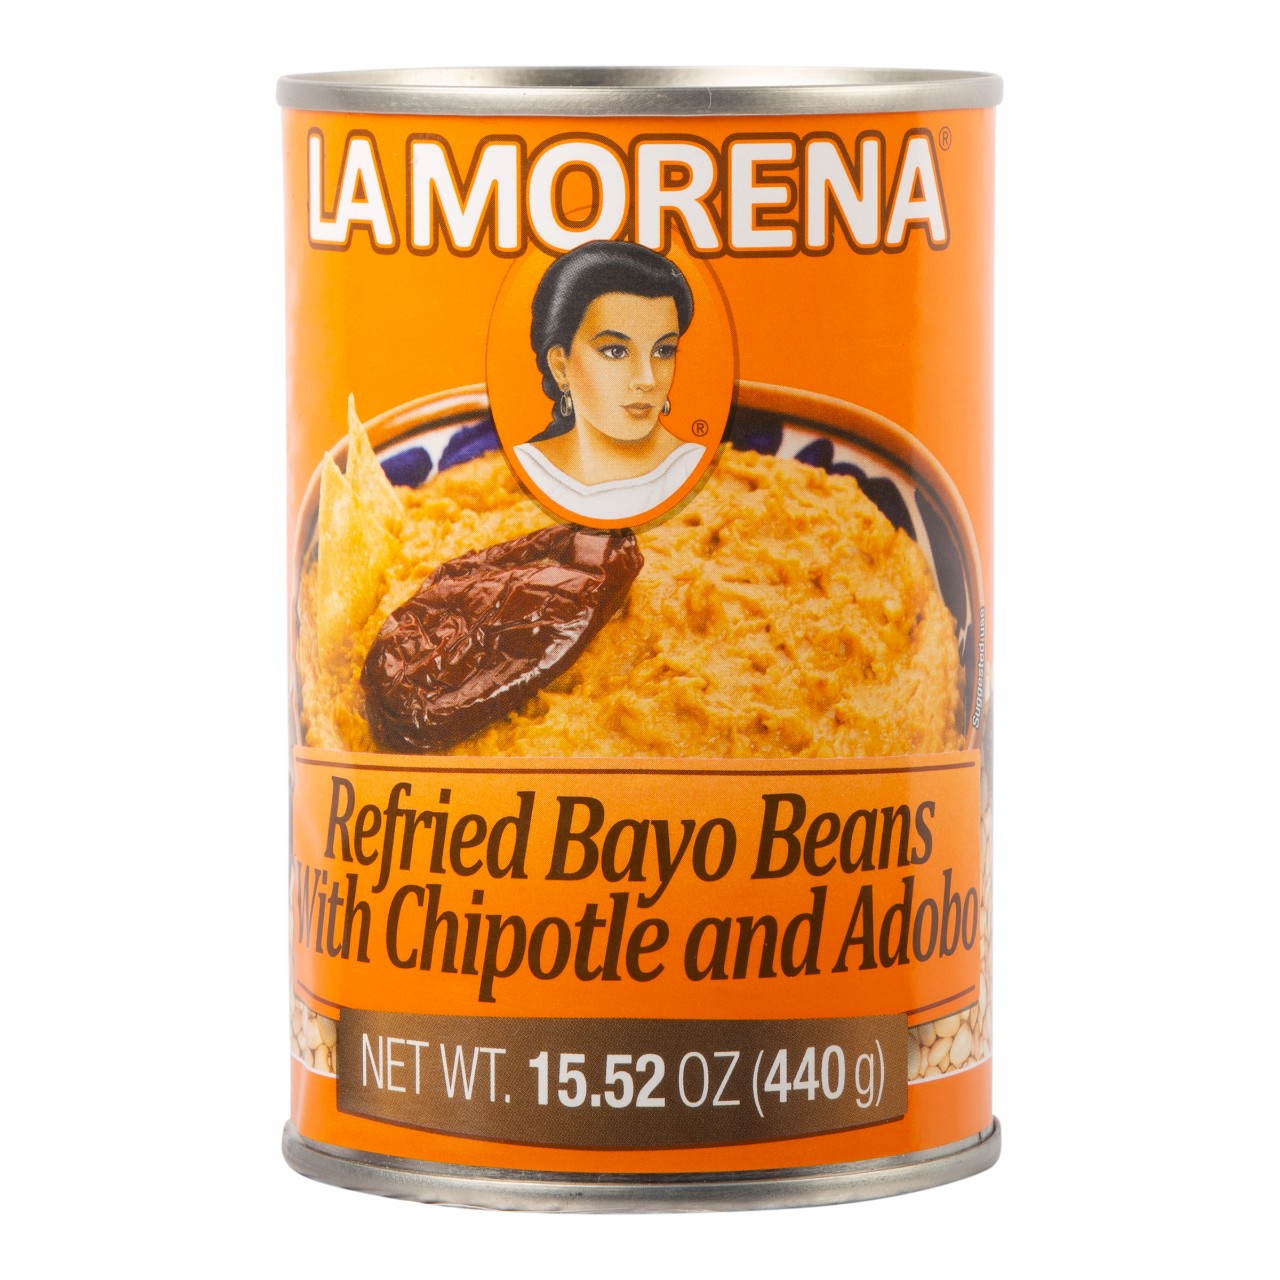 Bayo beans refried